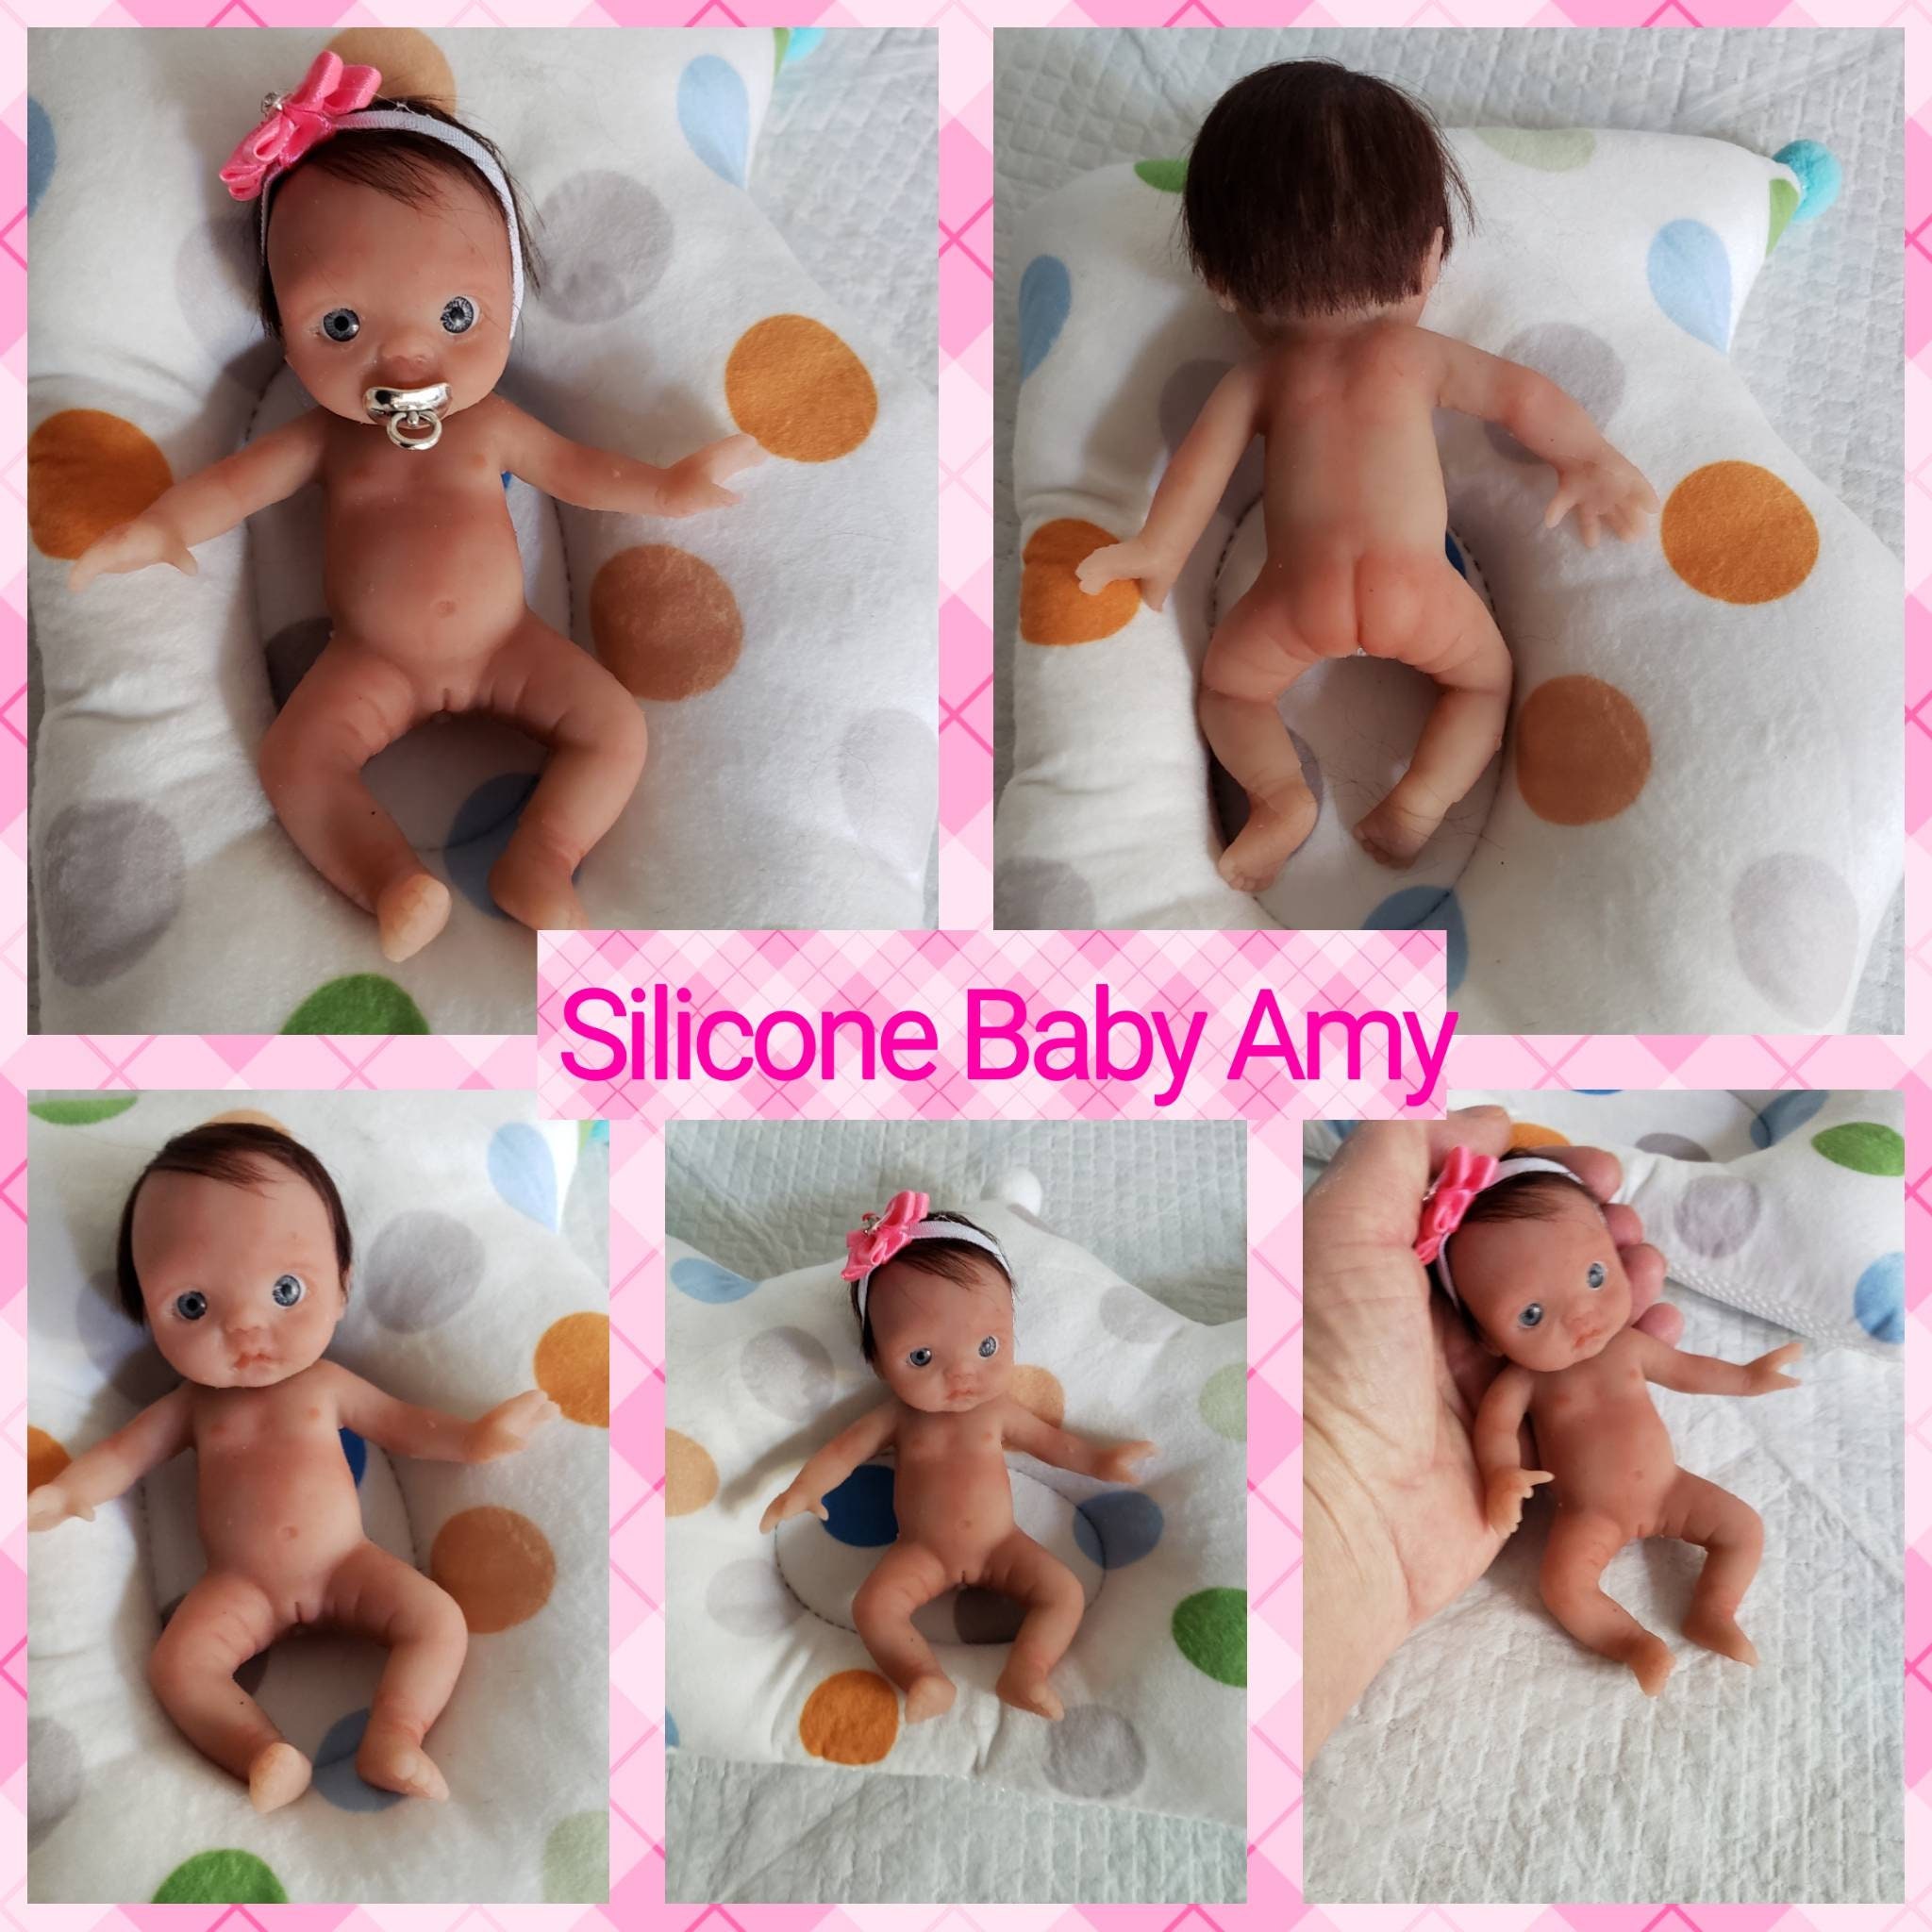 Kids Pretend Play Mini House Telephone Toy Boys Girls Preschool Play Gifts   Lifelike Reborn Dolls for Sale❤️Cheap Realistic Silicone Newborn Baby Doll